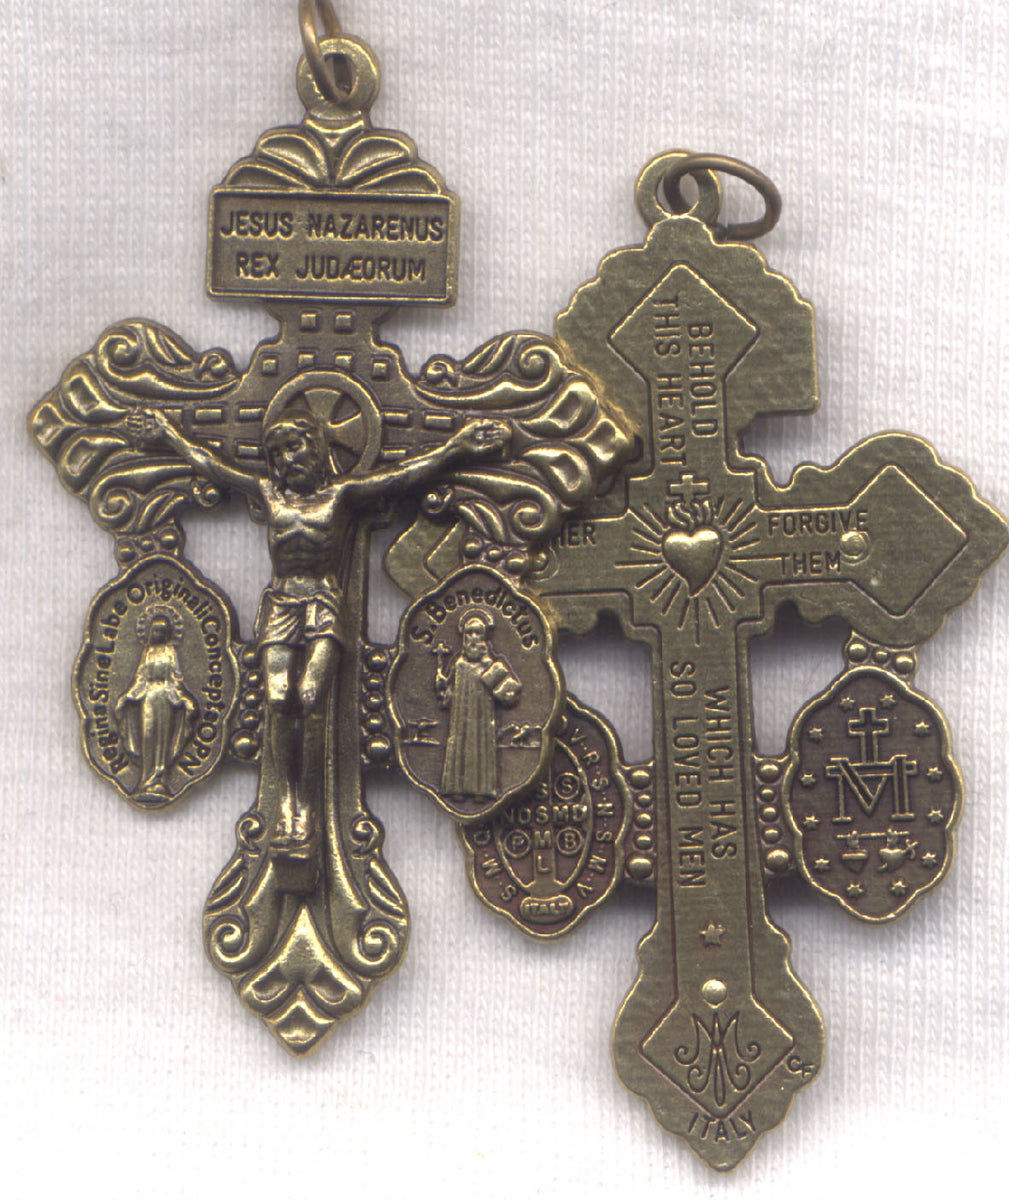 Buy Bulk Pack of 3 - Antique Bronze Miraculous Medal Rosary